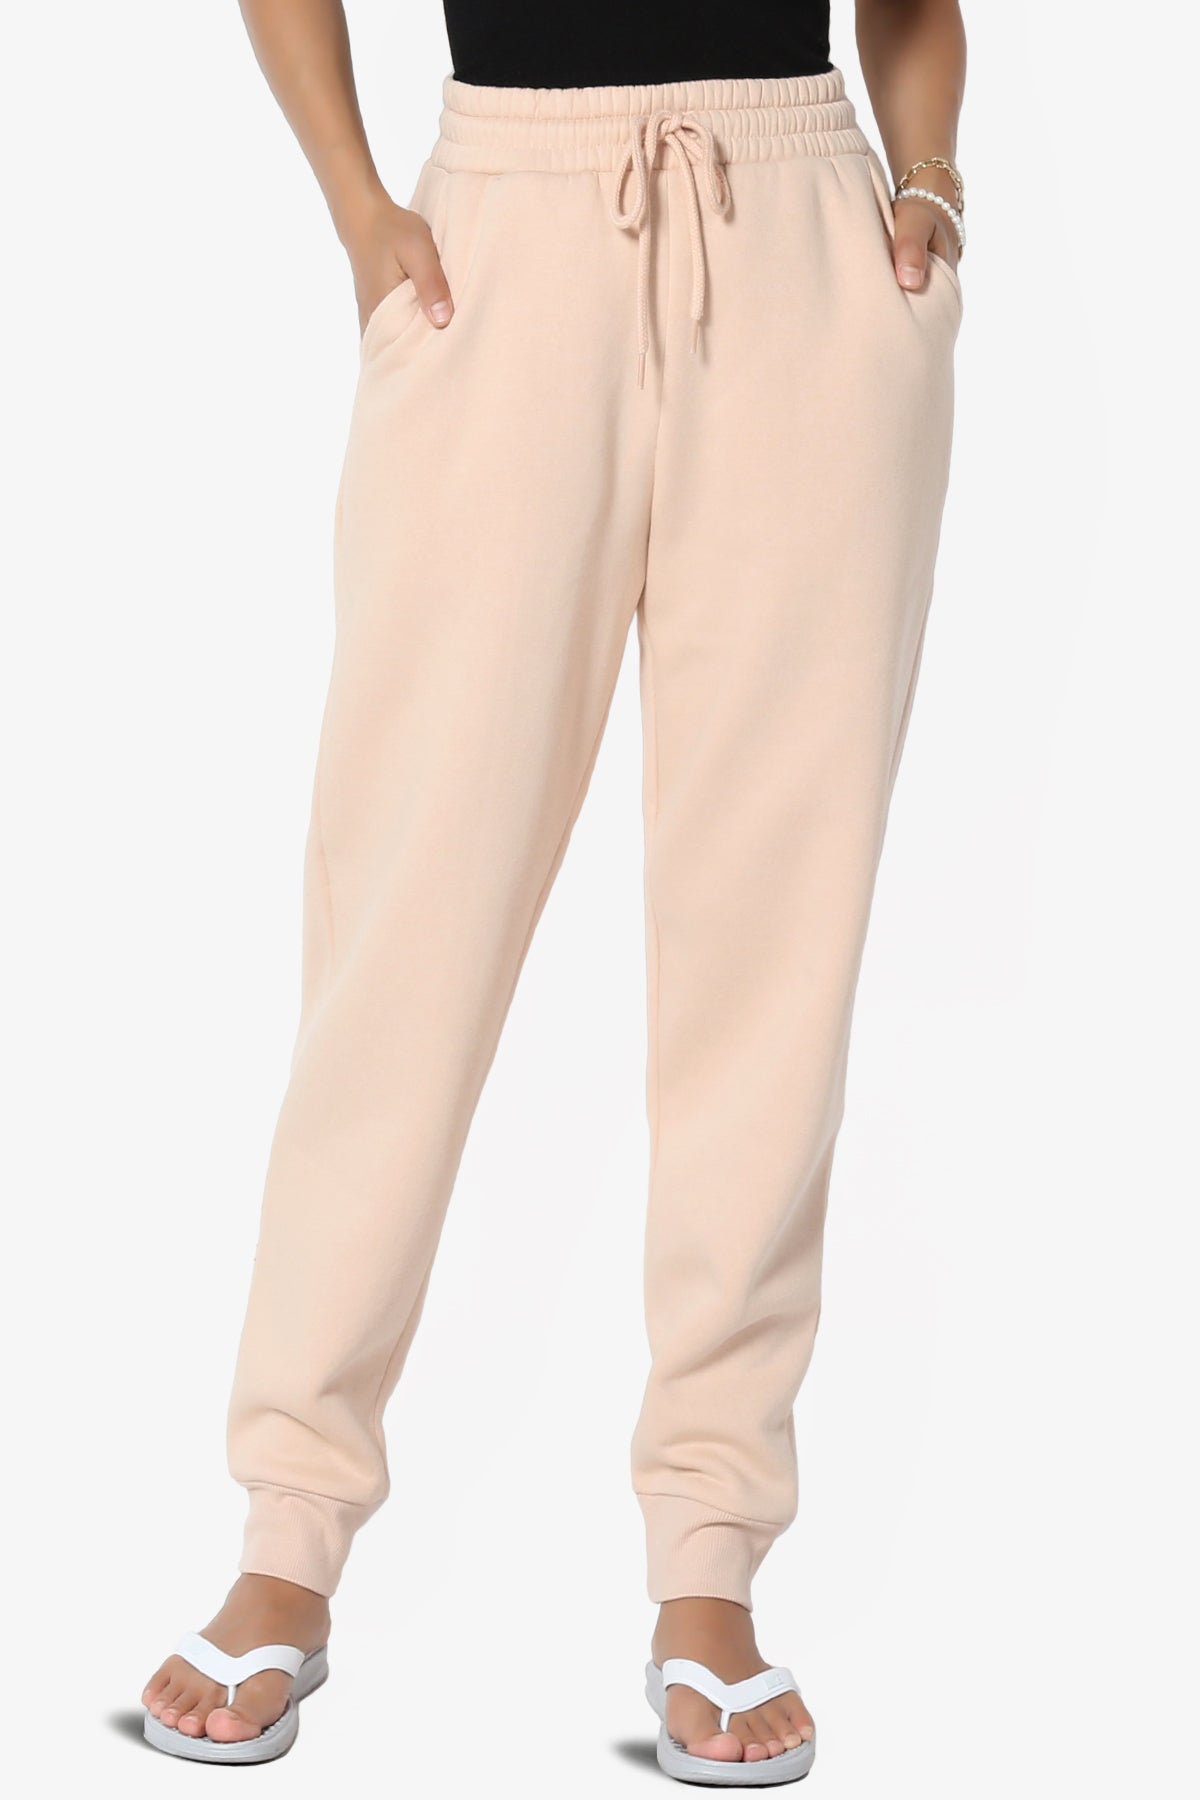 AMAOIS drawstring pants women Women's Drawstring Solid Sweatpants